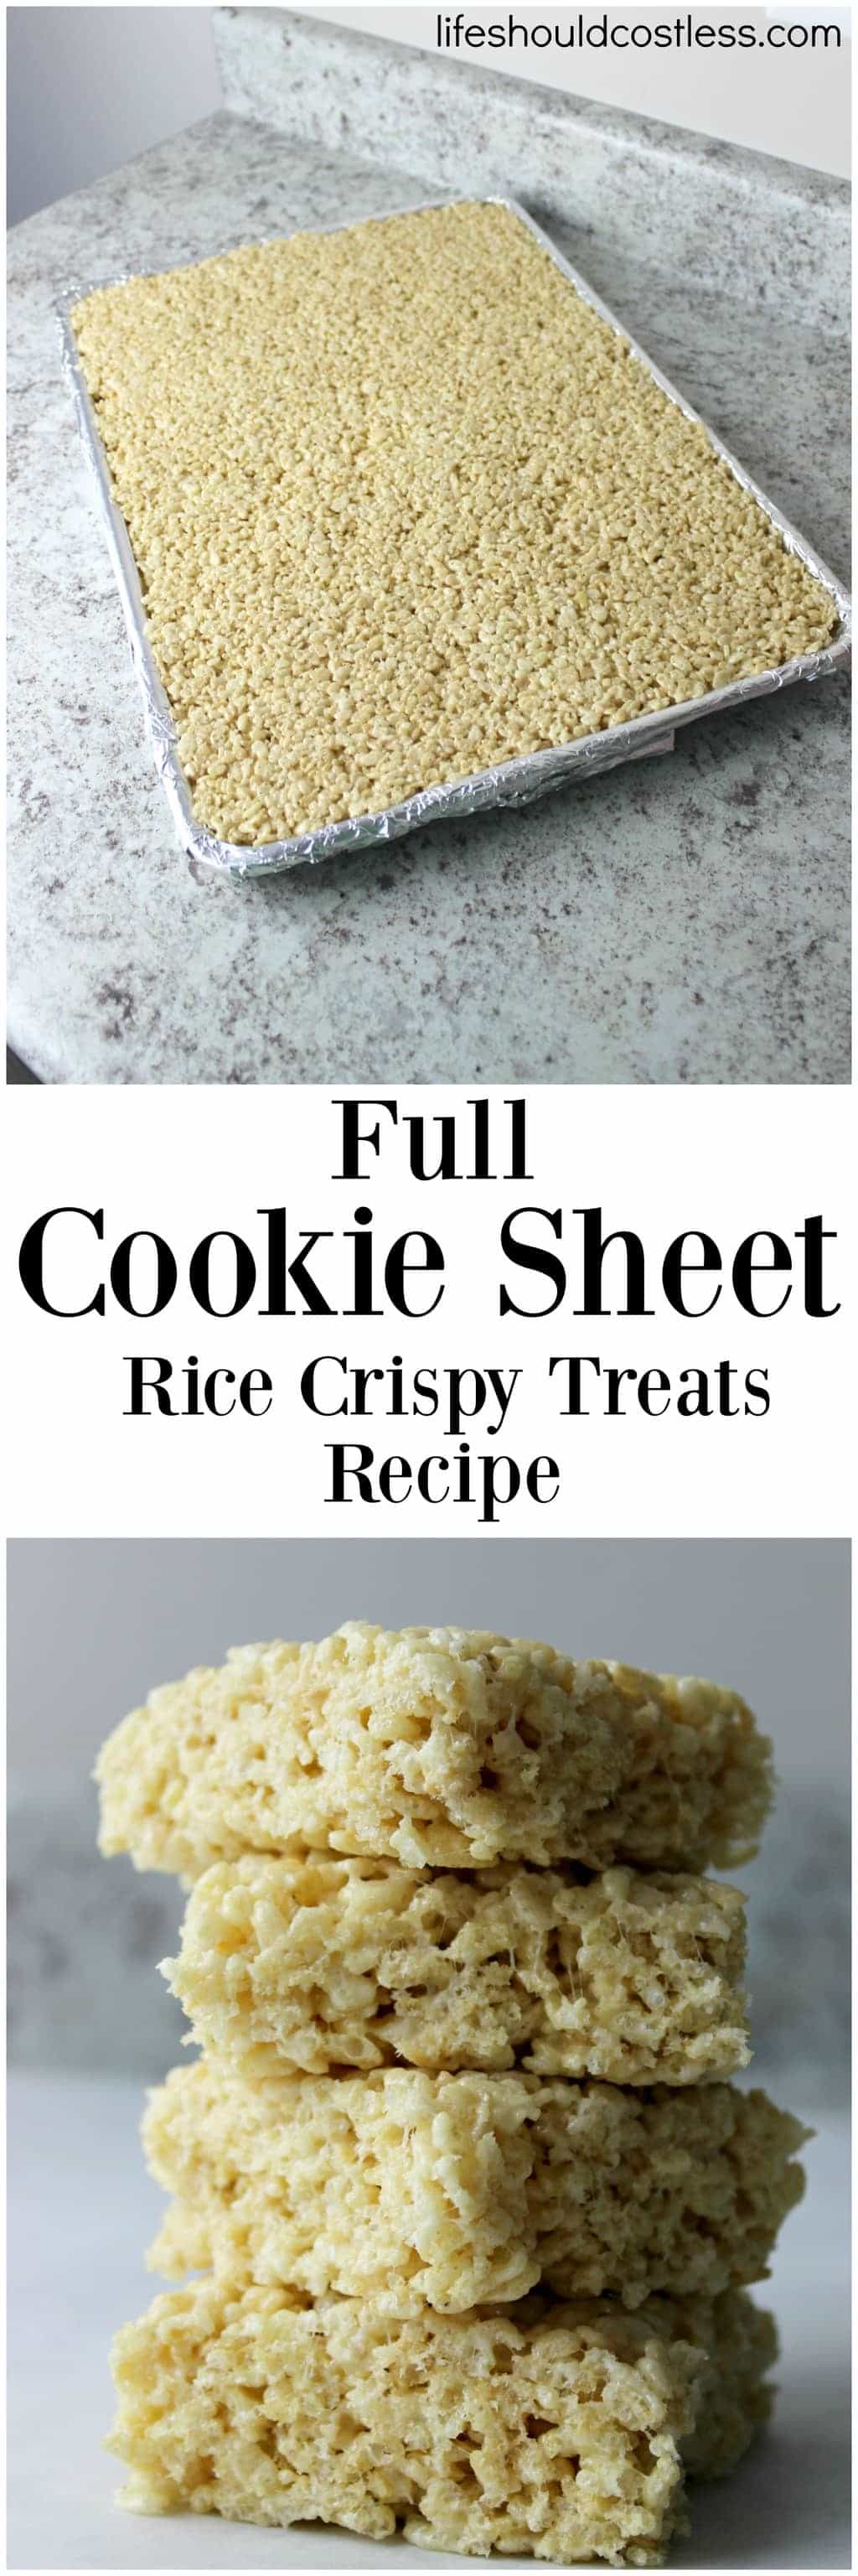 Full cookie sheet rice crispy treats recipe..